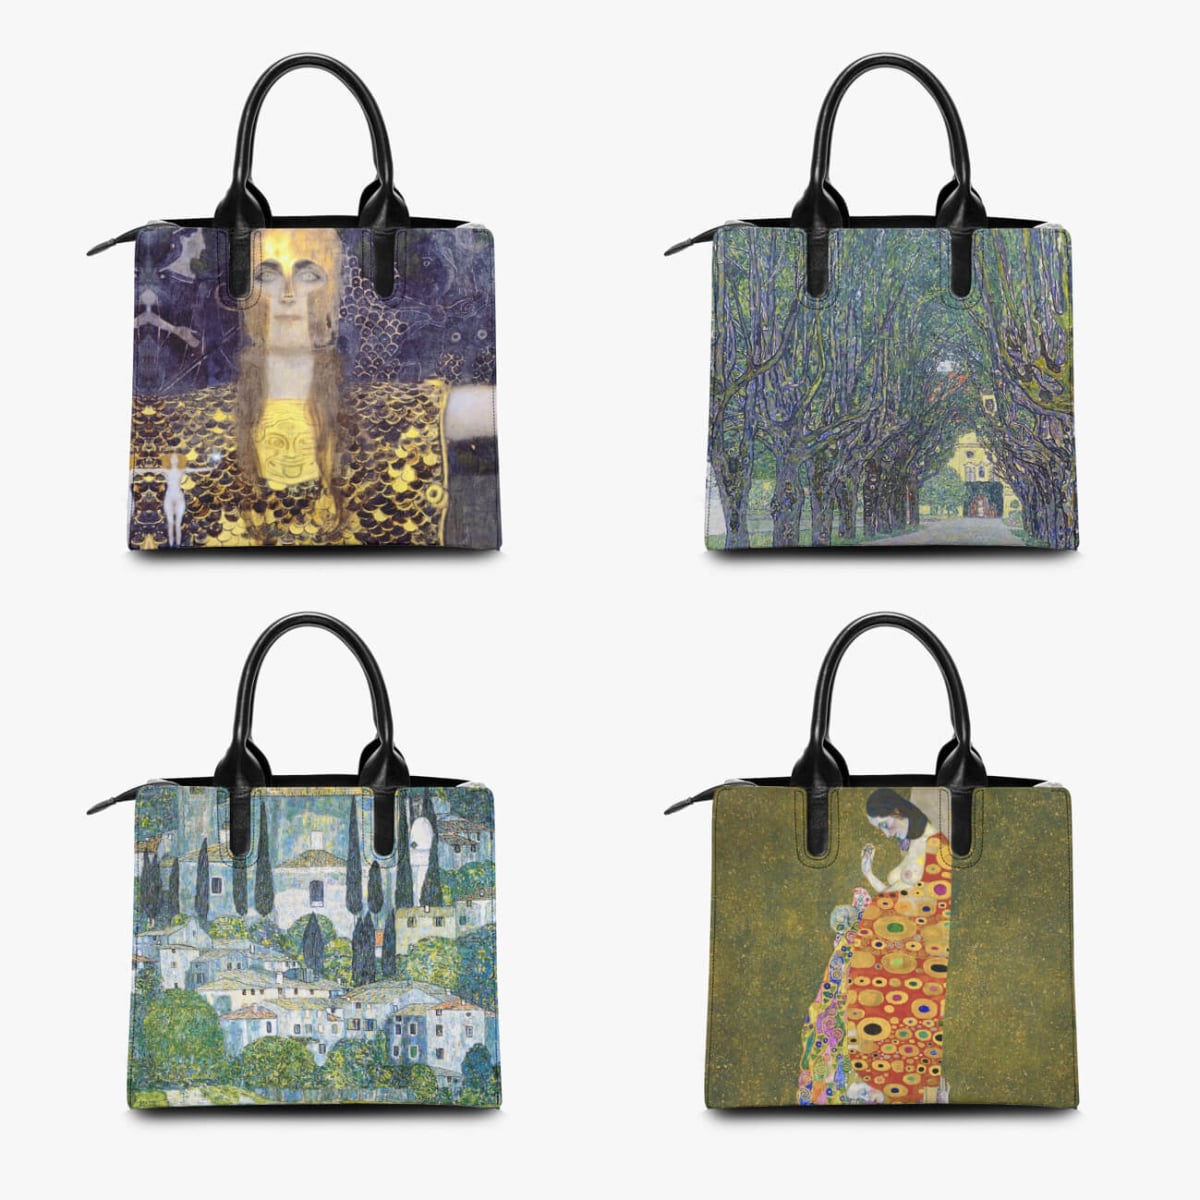 Gustav Klimt’s Hygieia Painting Art Leather Handbag